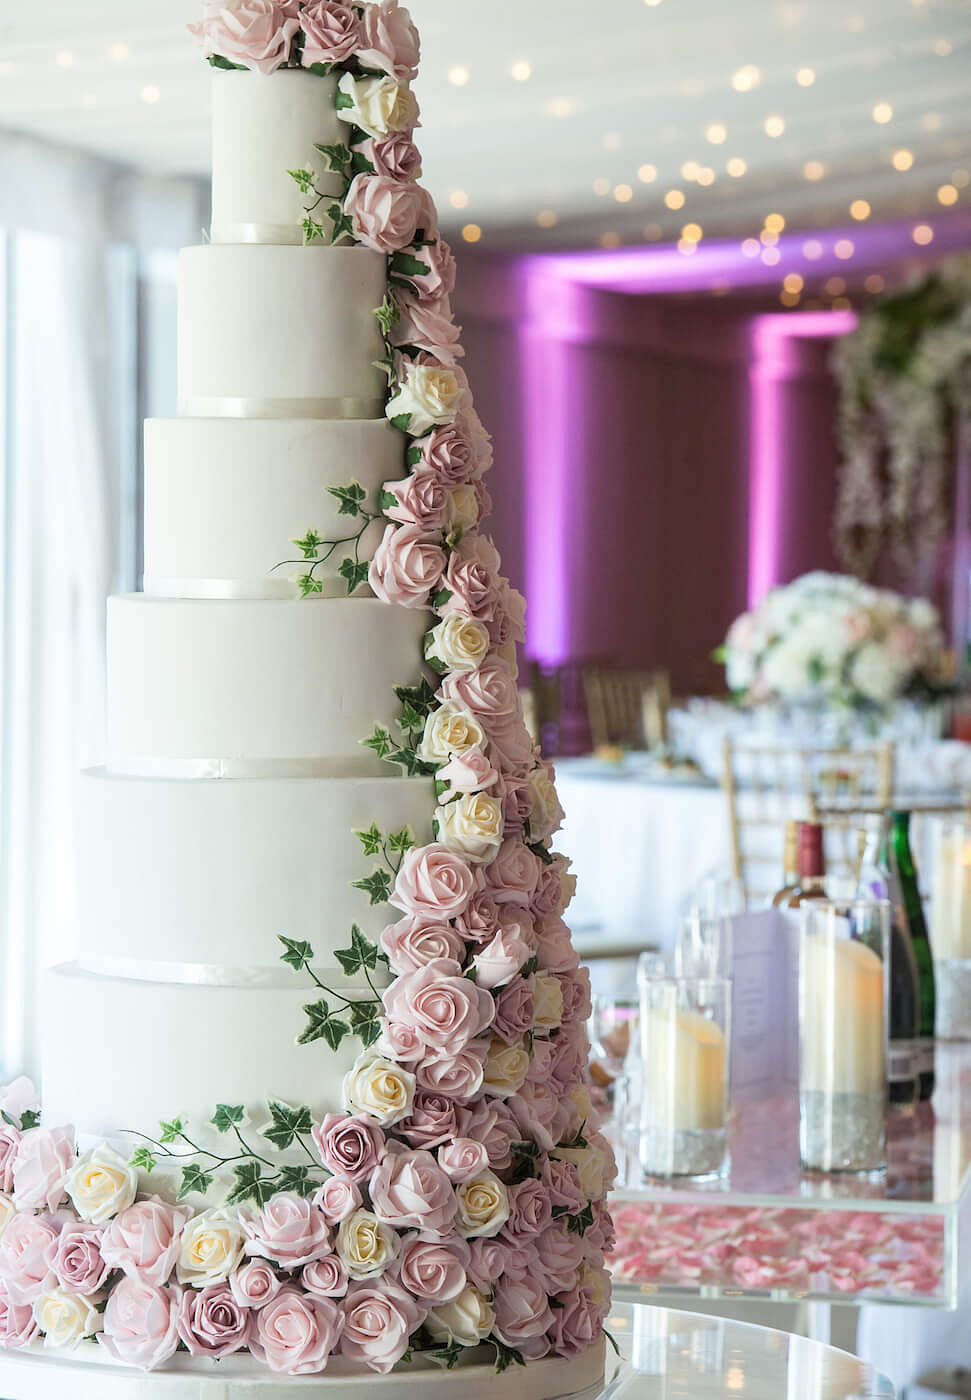 9 Beautiful Wedding Cake Ideas in 2018 - WeddingPlanner.co.uk